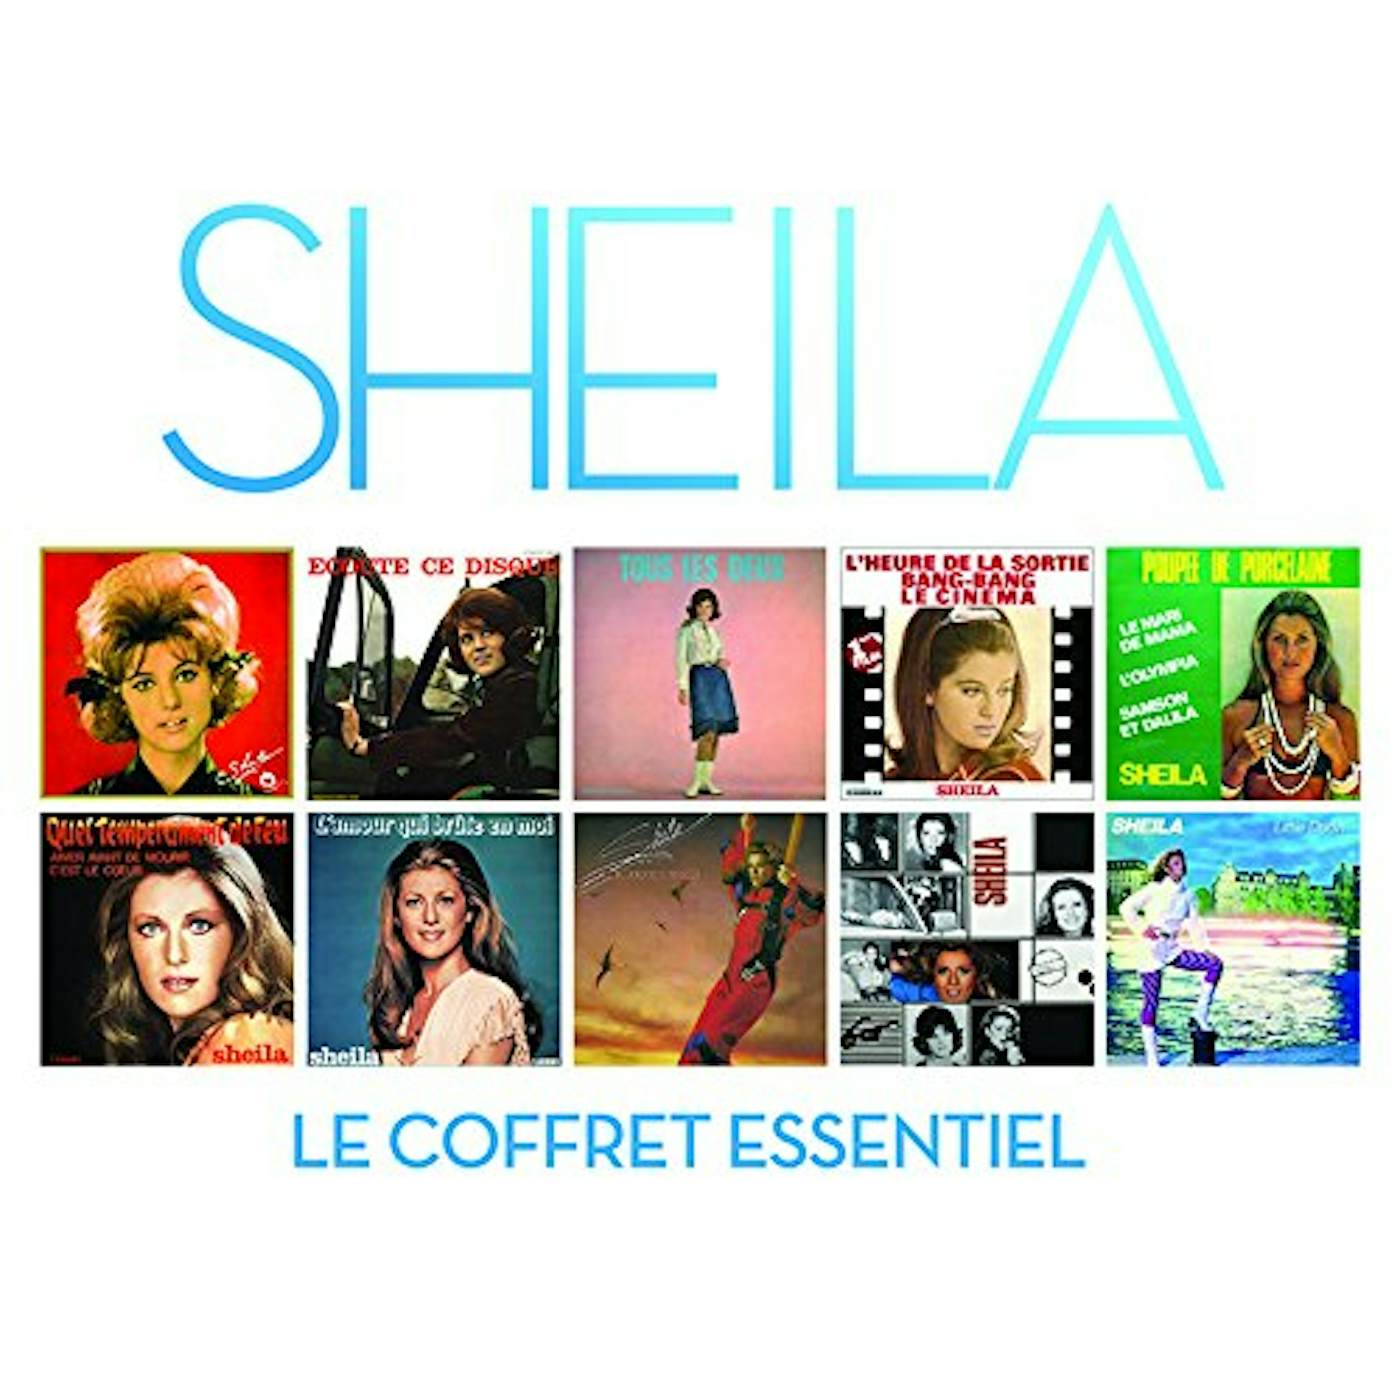 Sheila COFFRET ESSENTIEL CD